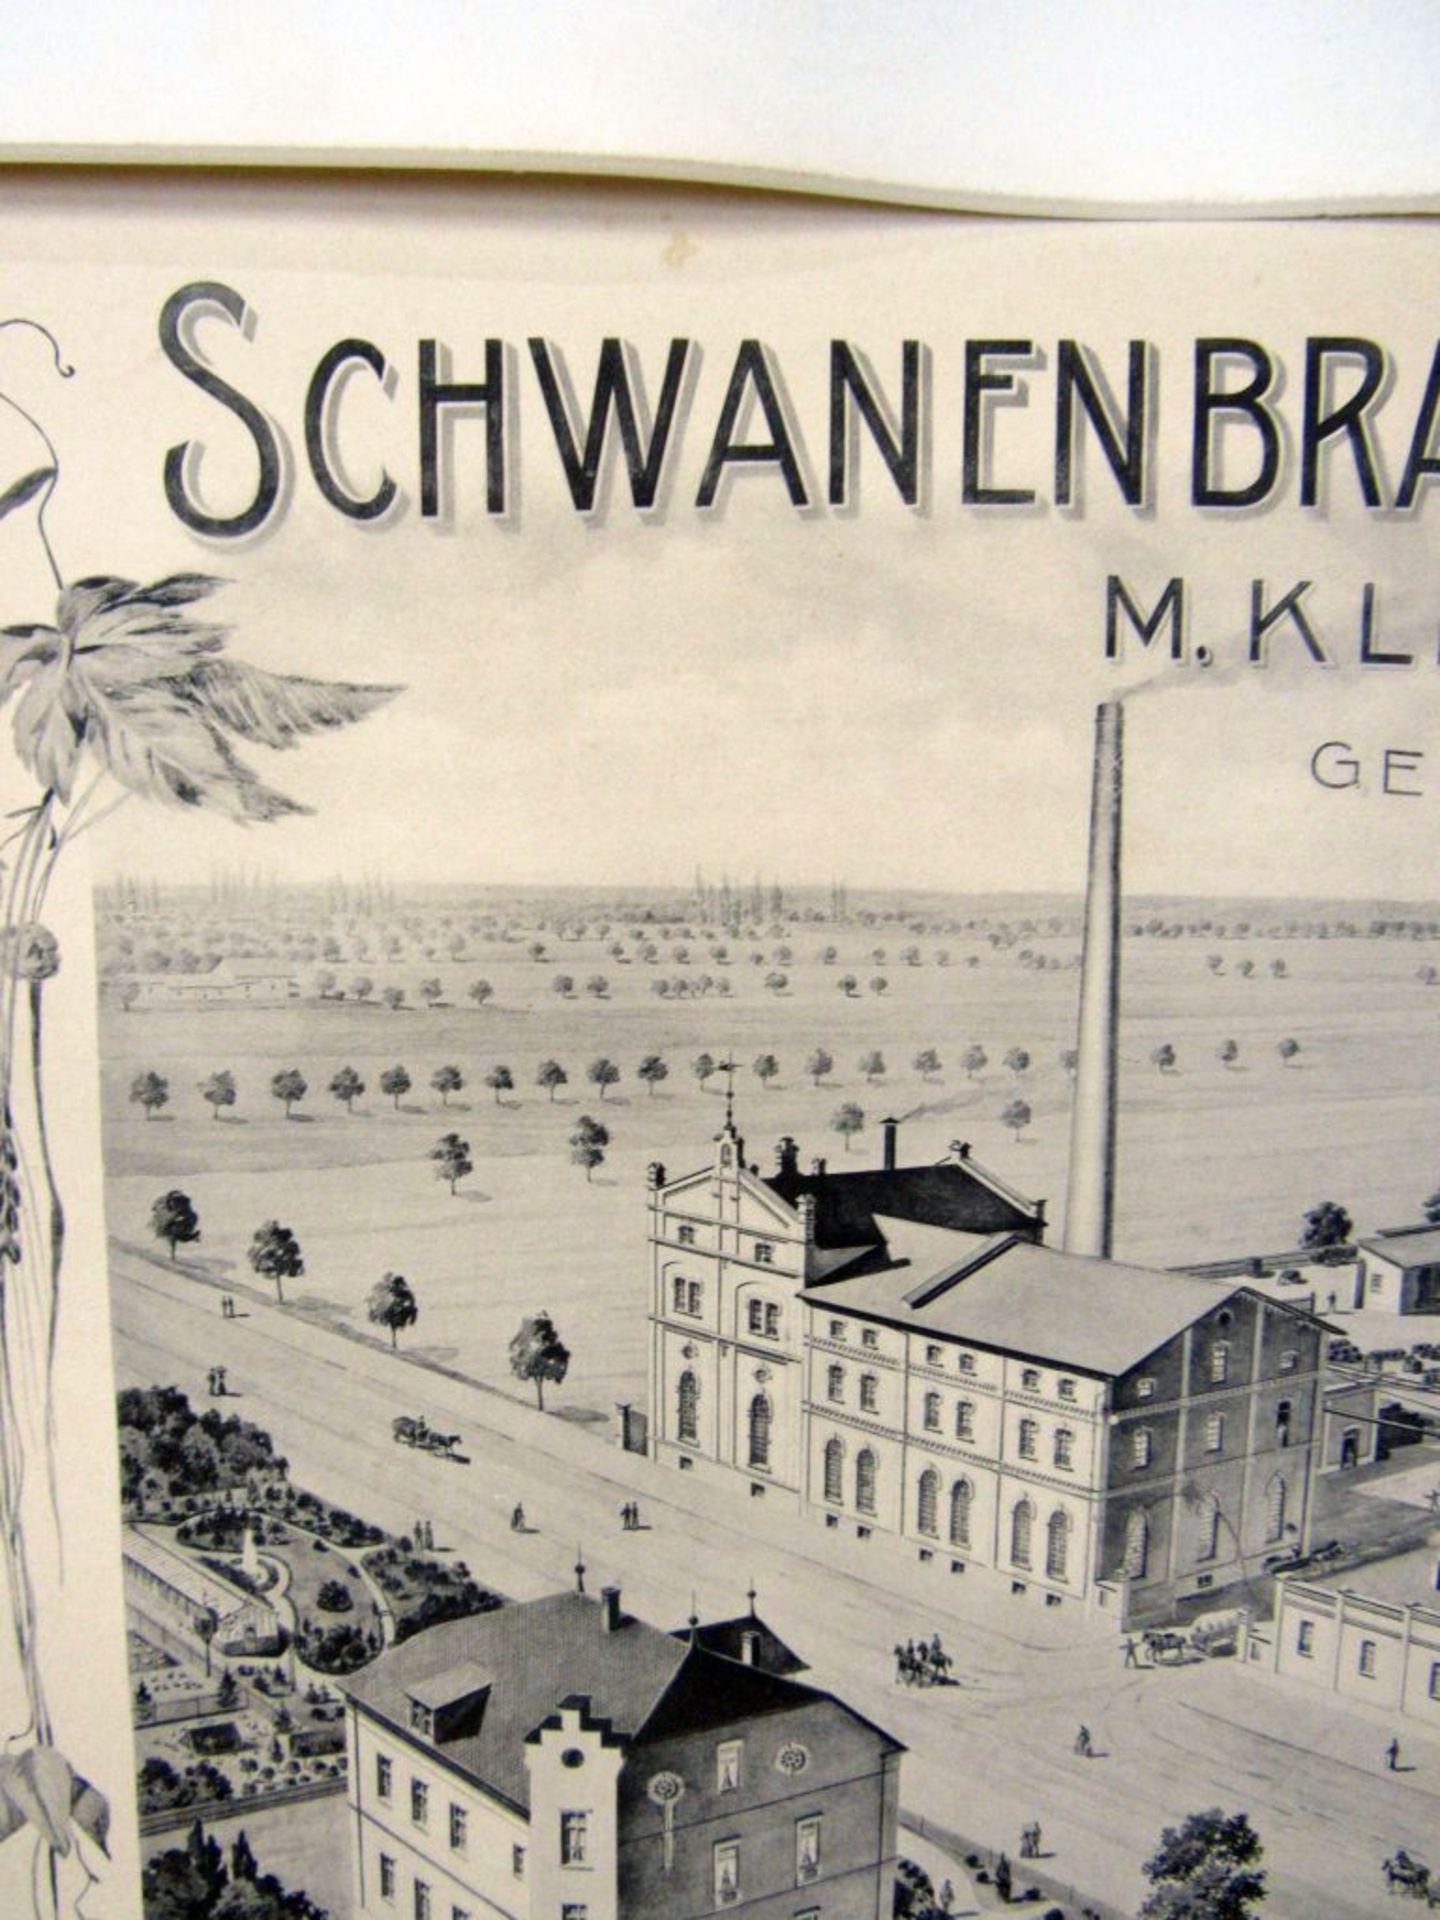 Grafik Reklame Schwanenbrauerei - Image 8 of 10